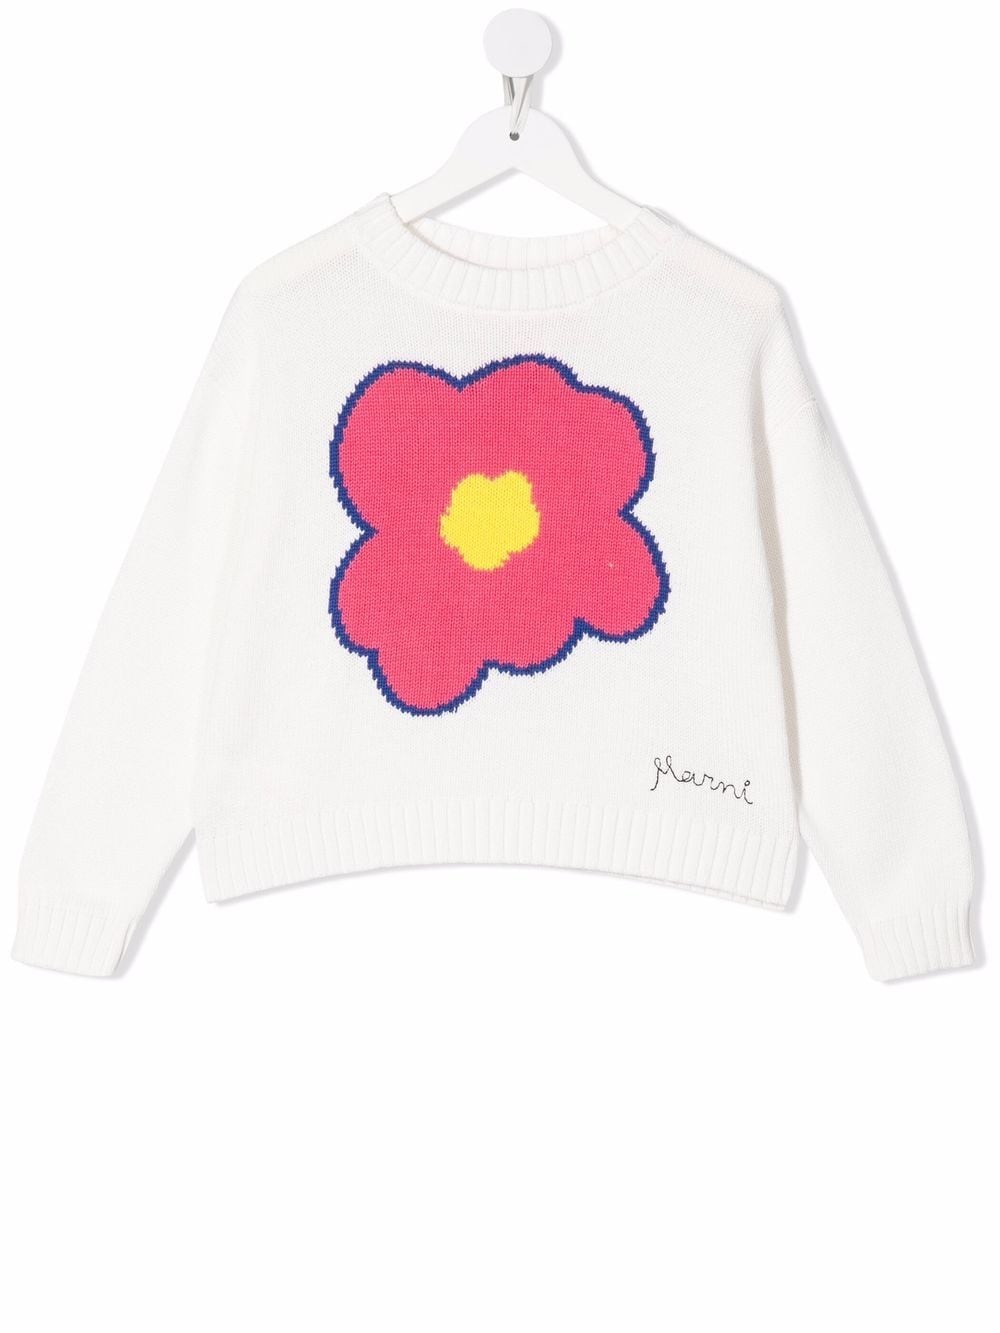 Marni - floral-print cotton sweatshirt